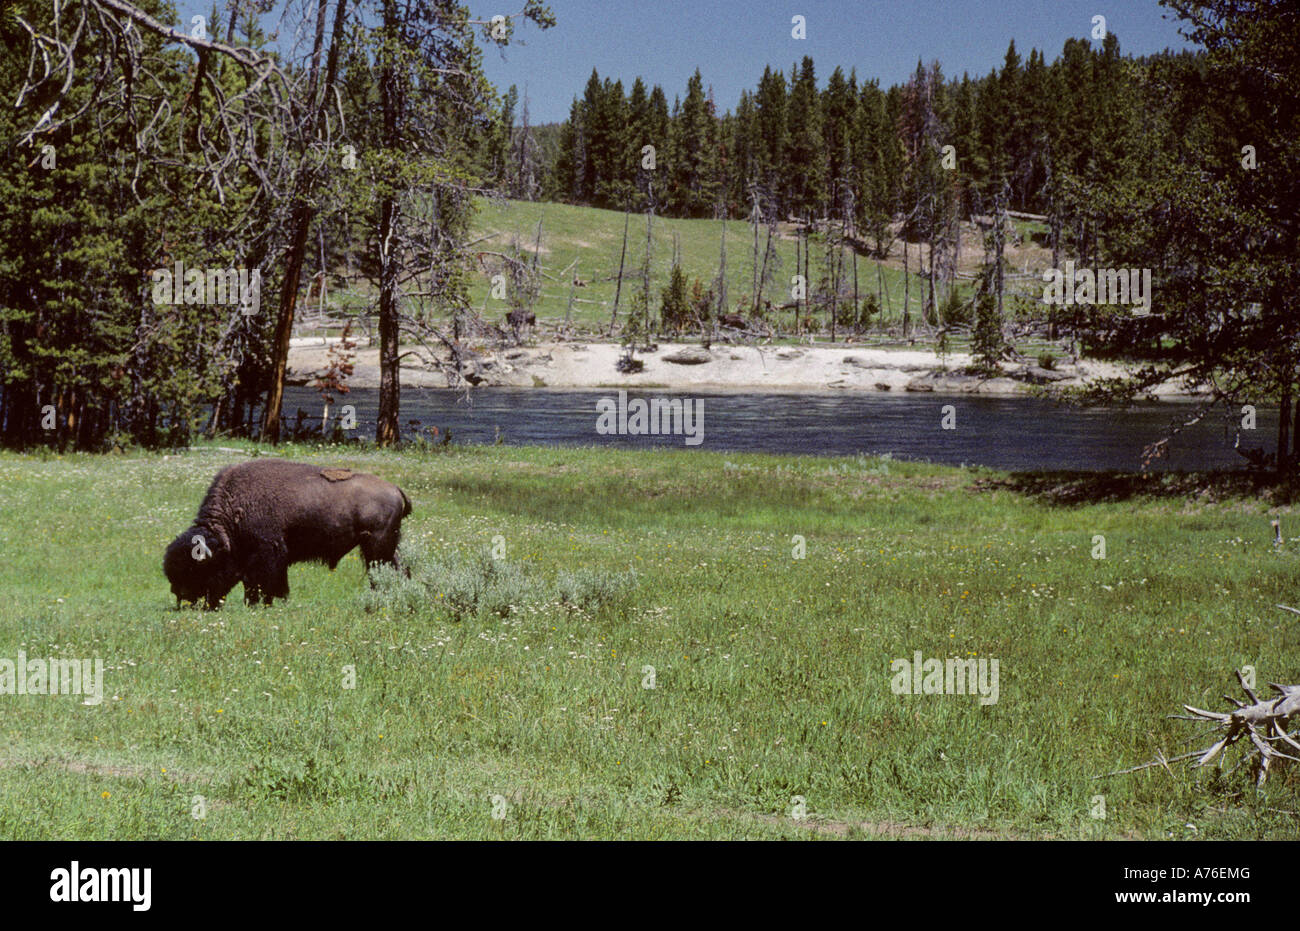 A Buffalo grazes in an open meadow in Yellowstone National Park, USA. Stock Photo